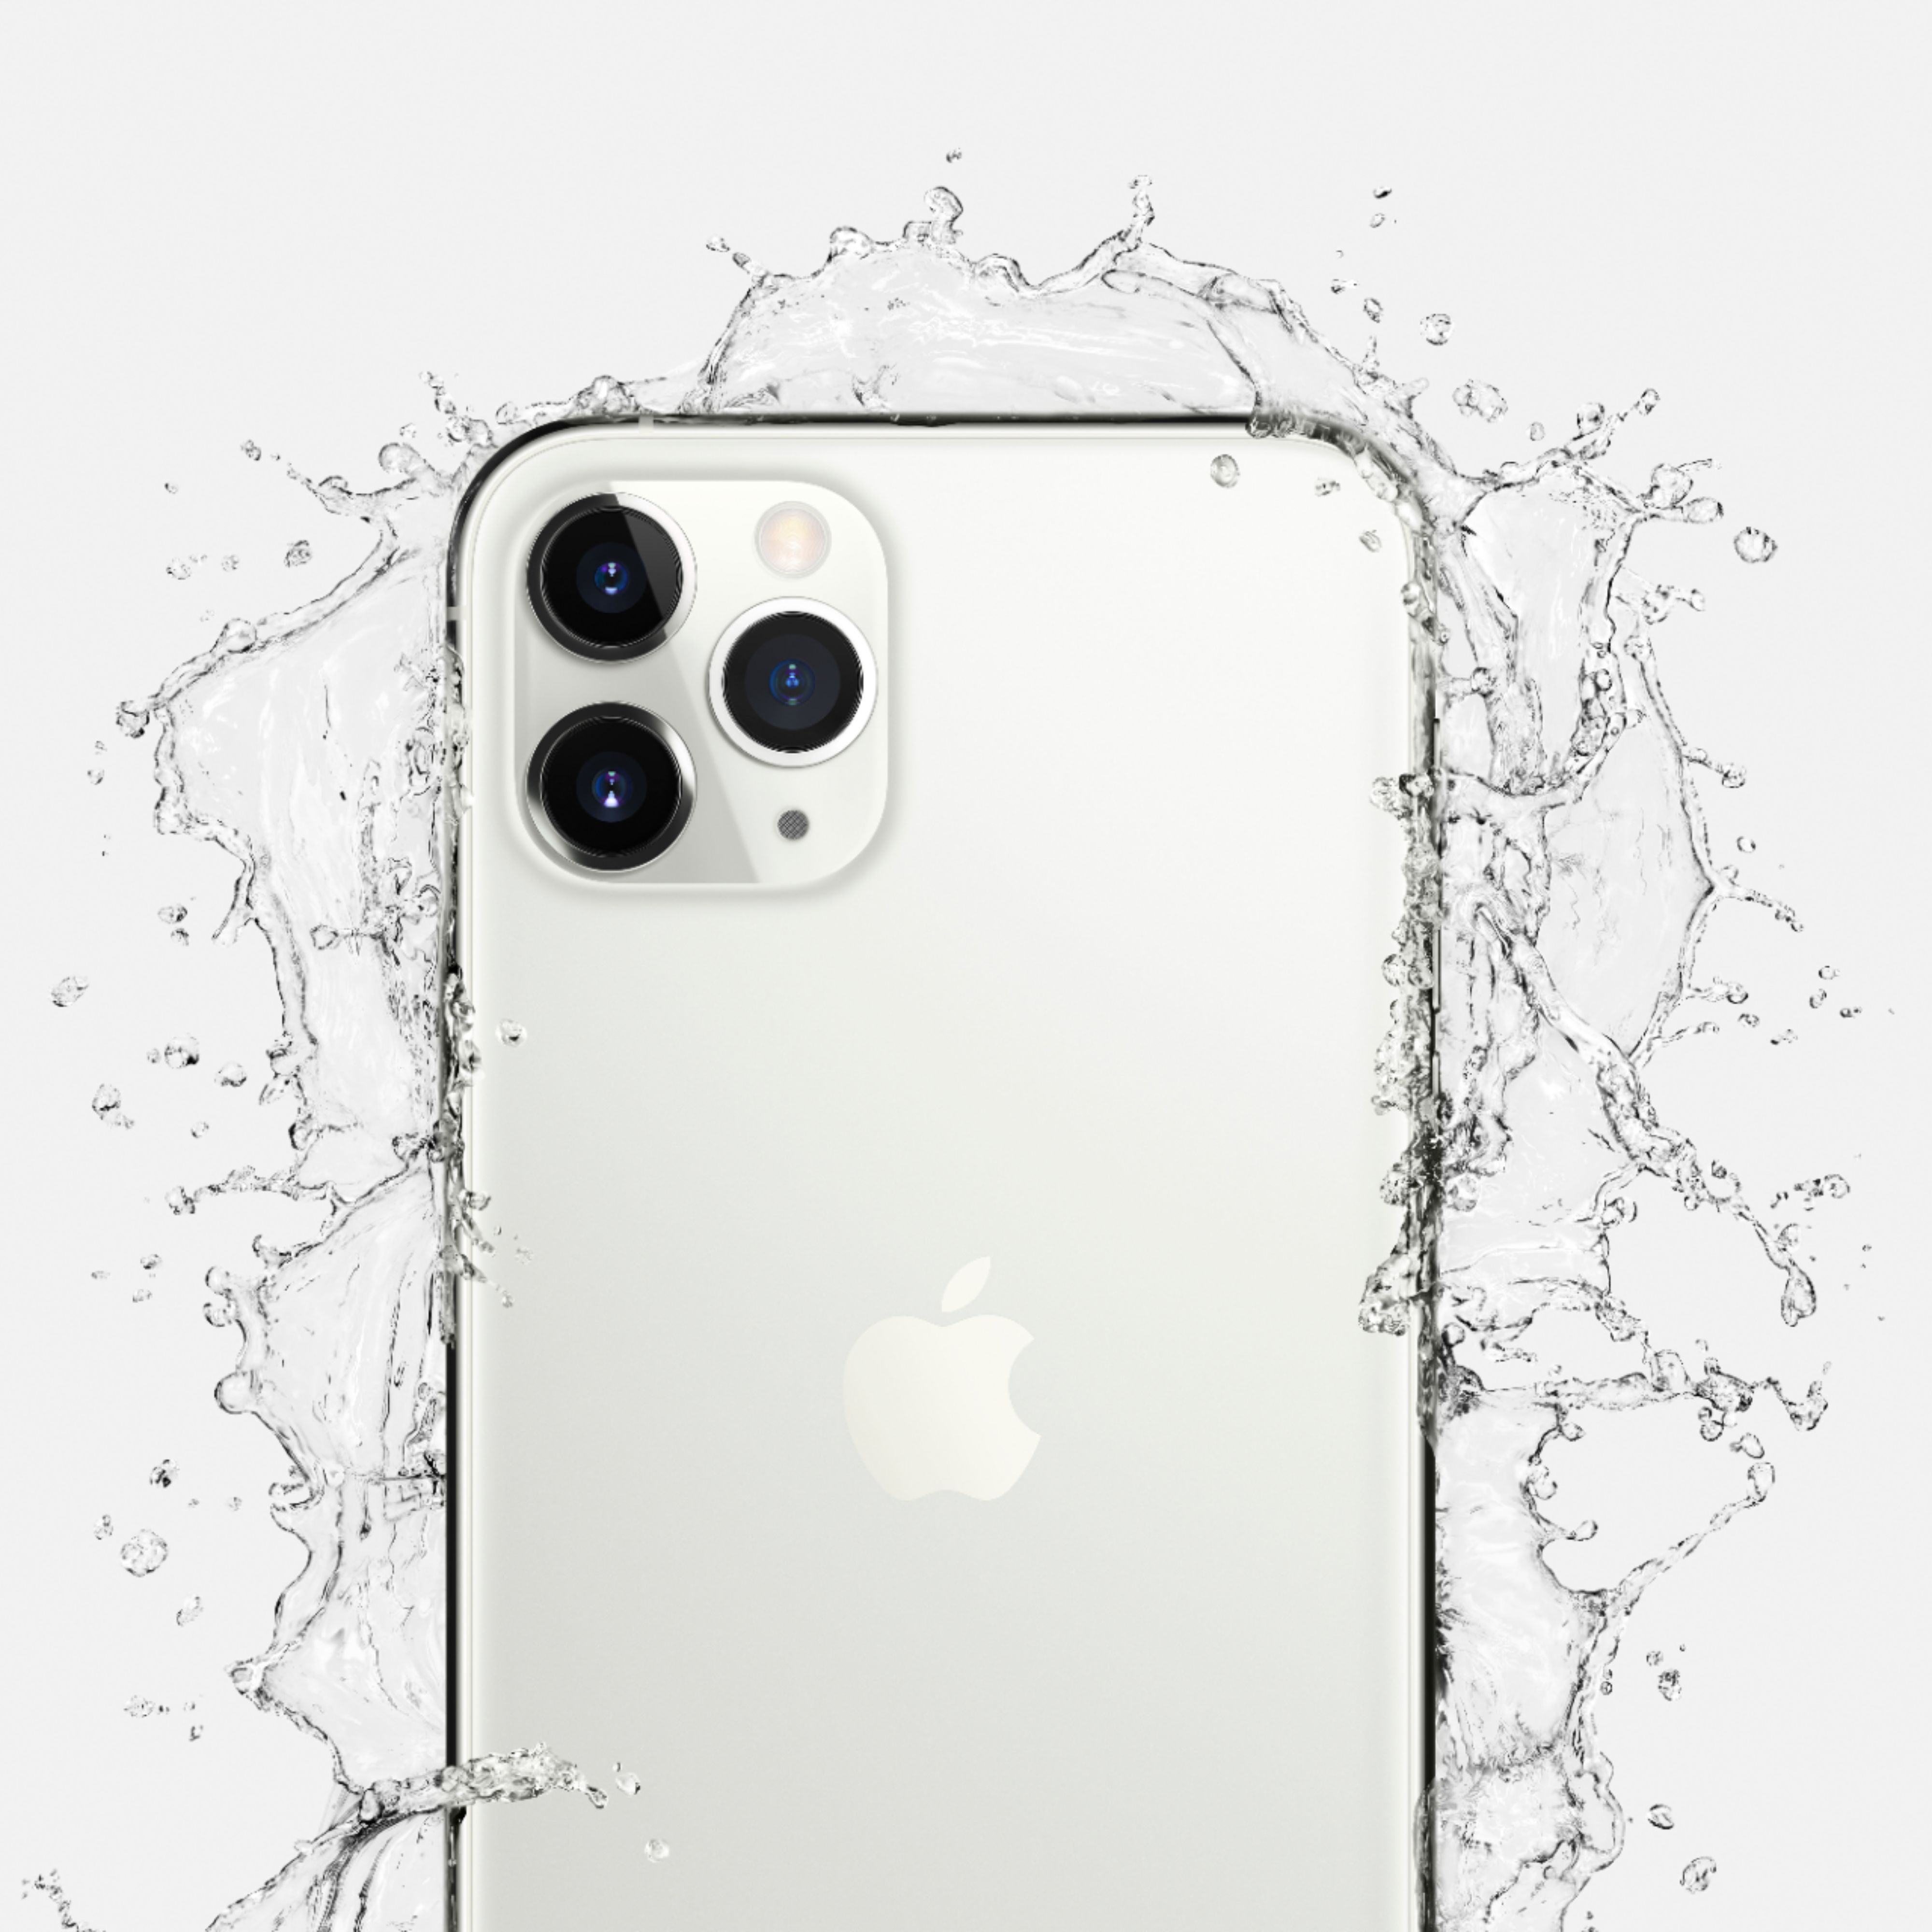 Apple Iphone 11 Pro Max 64gb Silver Unlocked Mwgg2ll A Best Buy